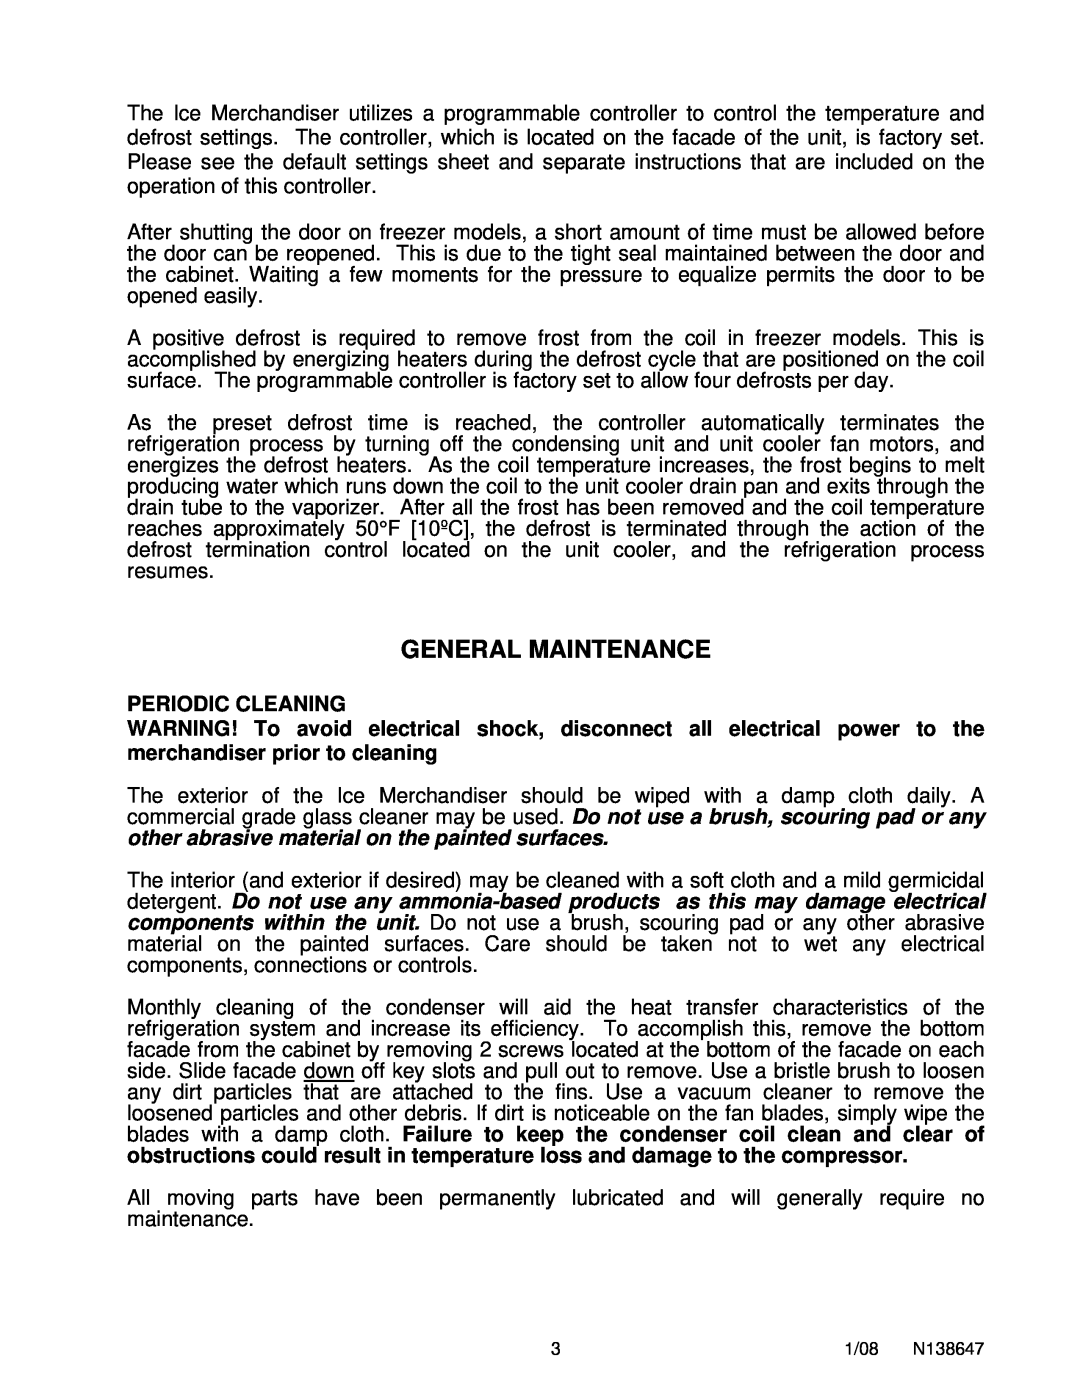 Master Bilt Ice Merchandiser manual General Maintenance, Periodic Cleaning 